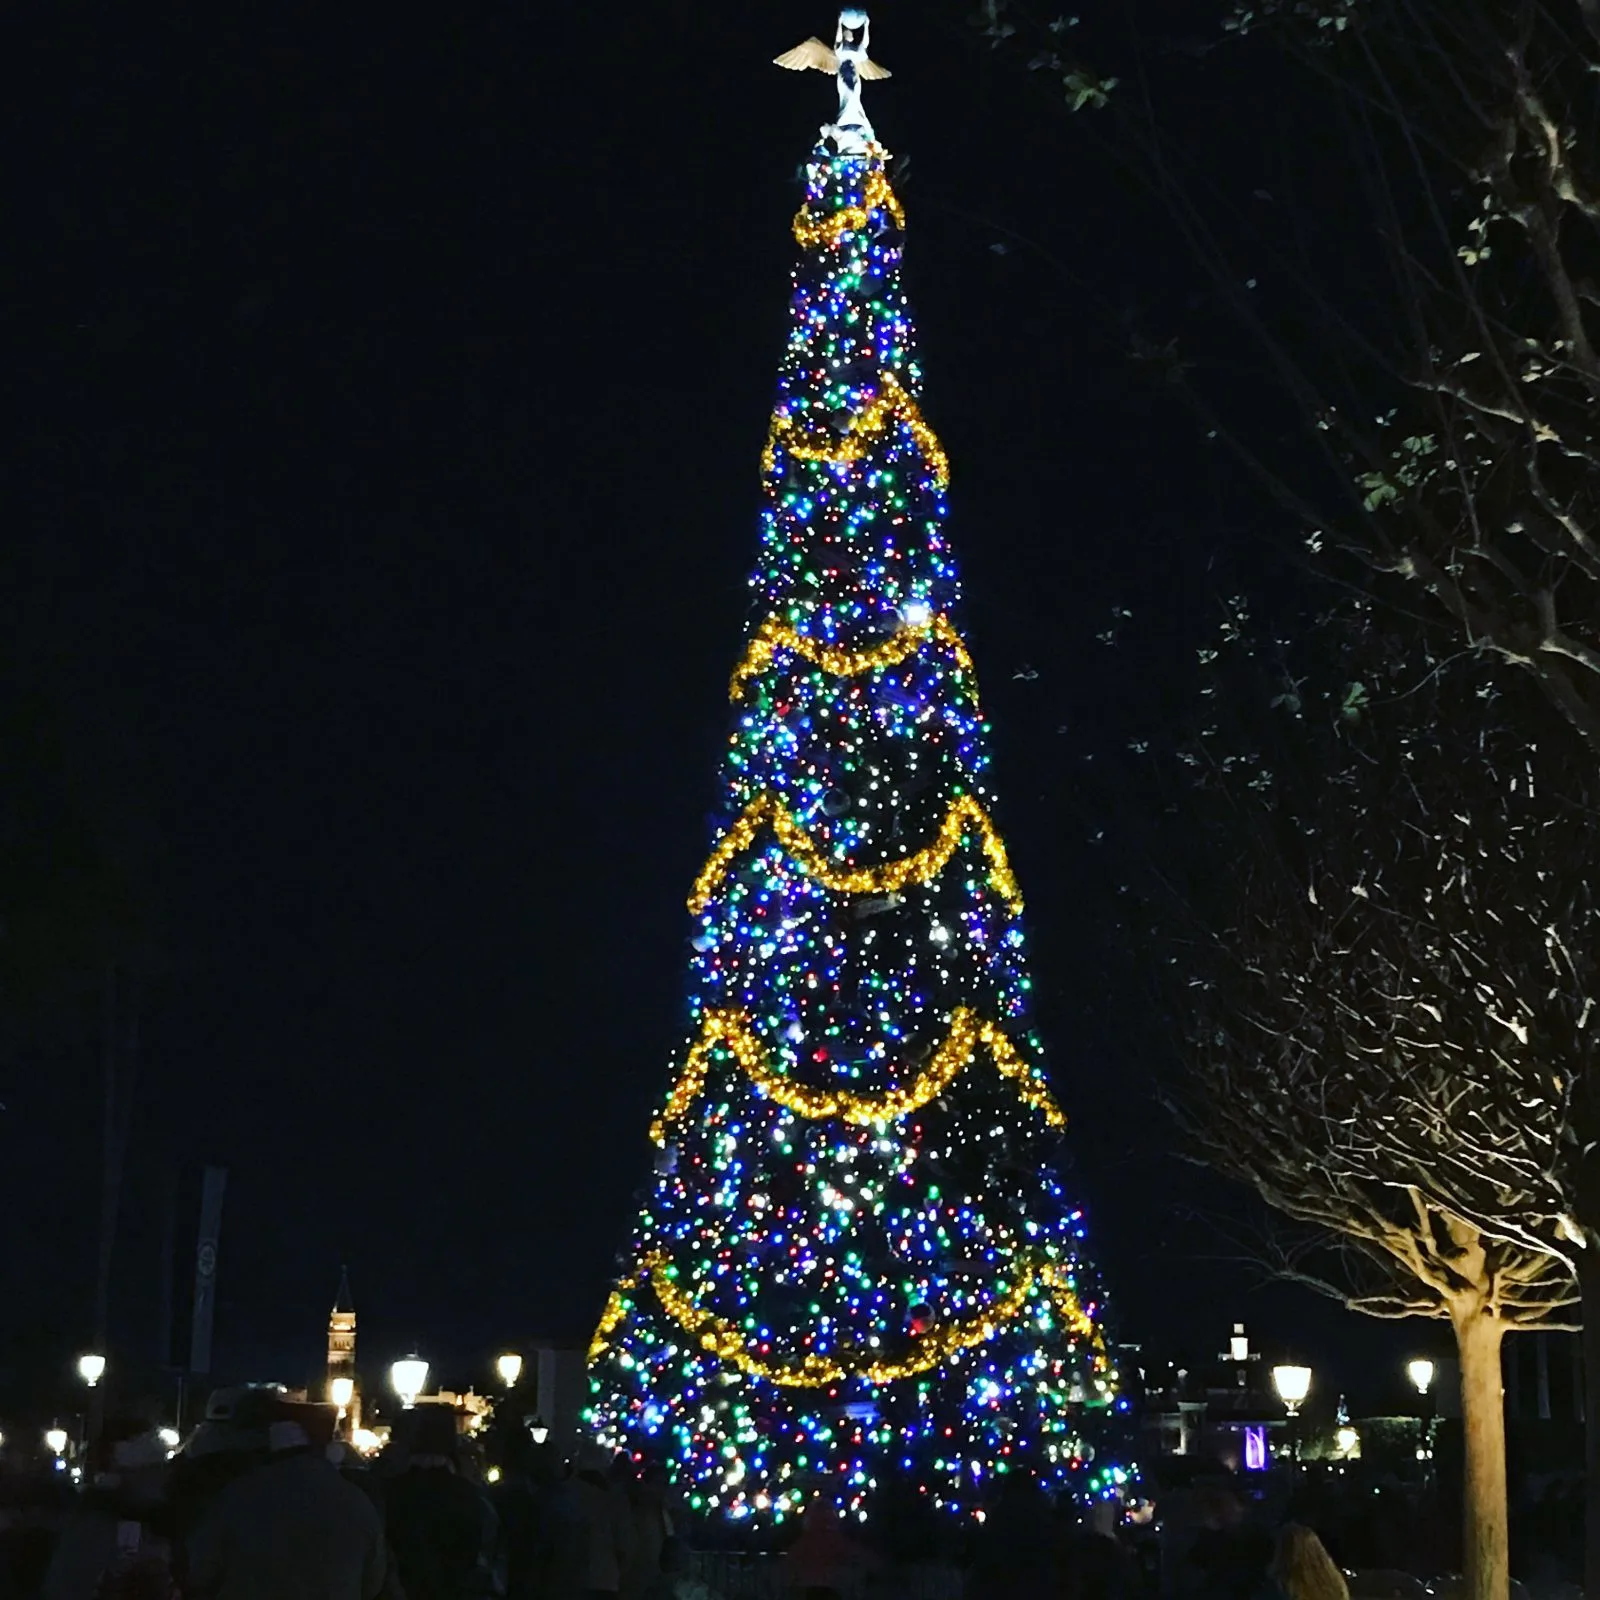 tree with lights at night